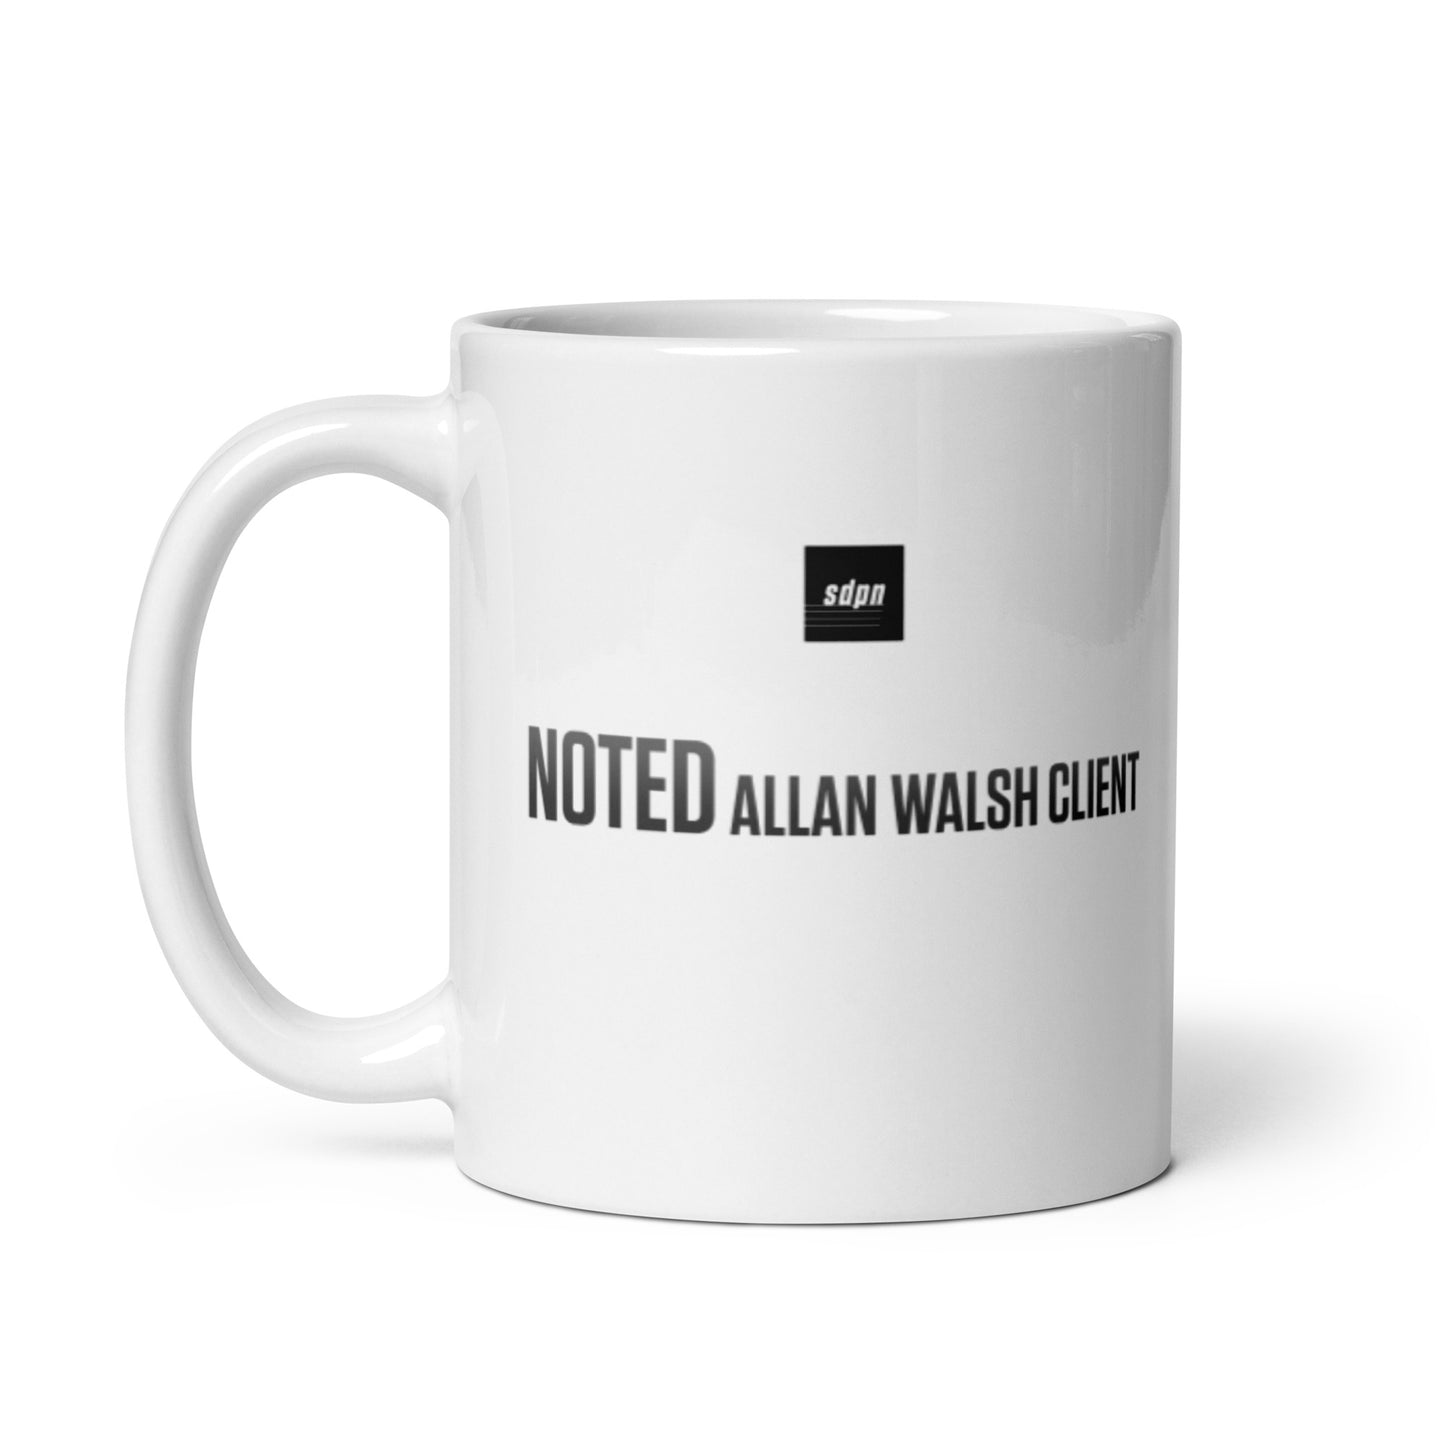 NOTED Allan Walsh Client Mug